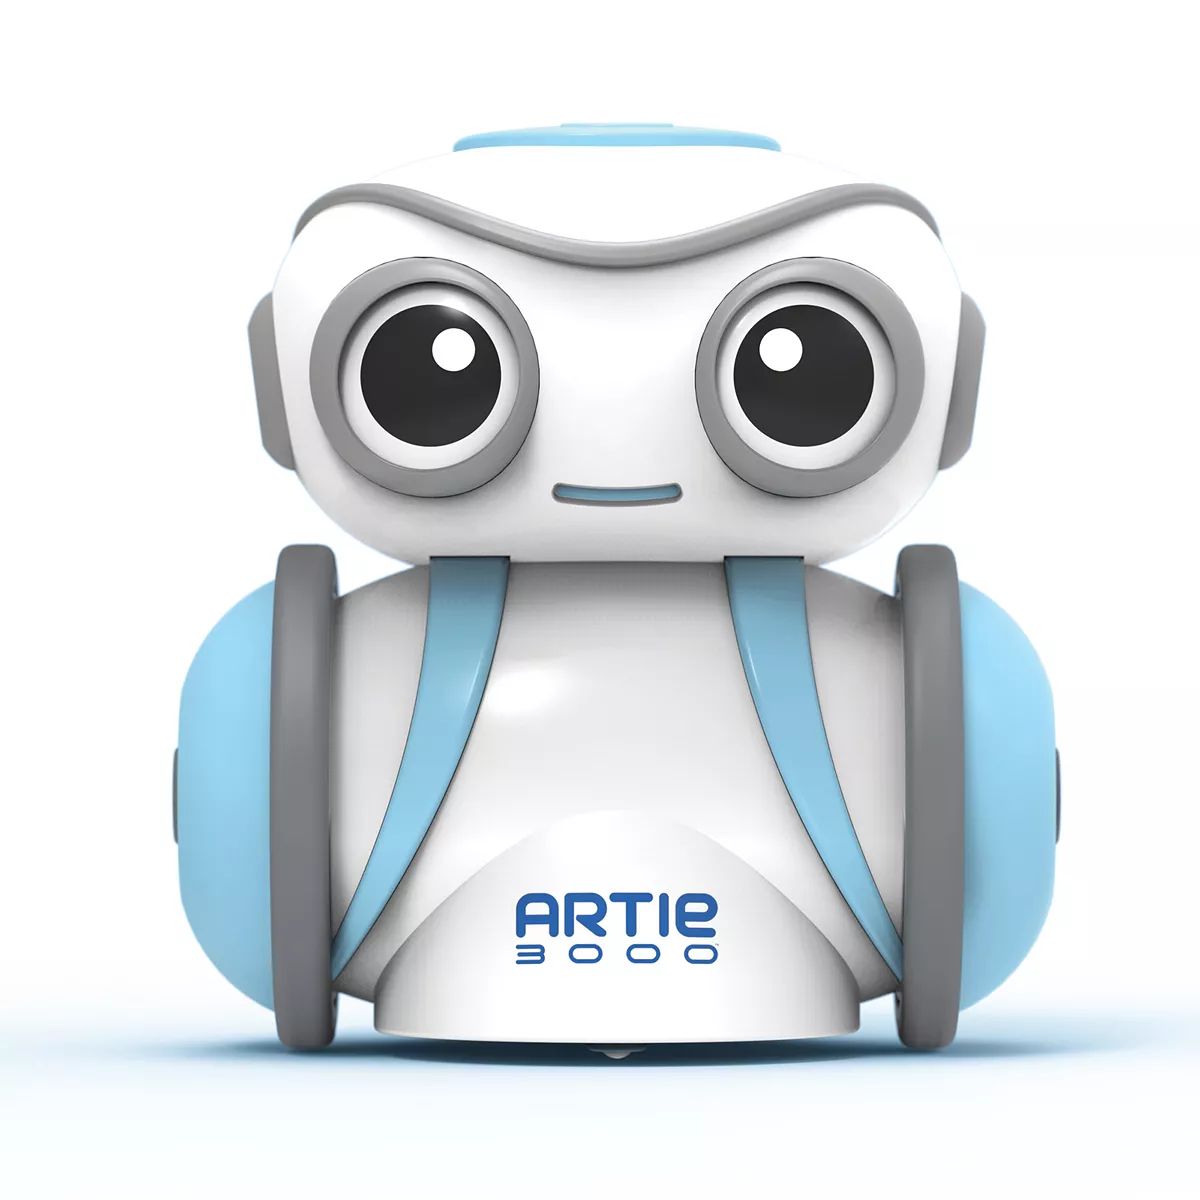 Educational Insights Artie 3000 Coding Robot | Kohl's